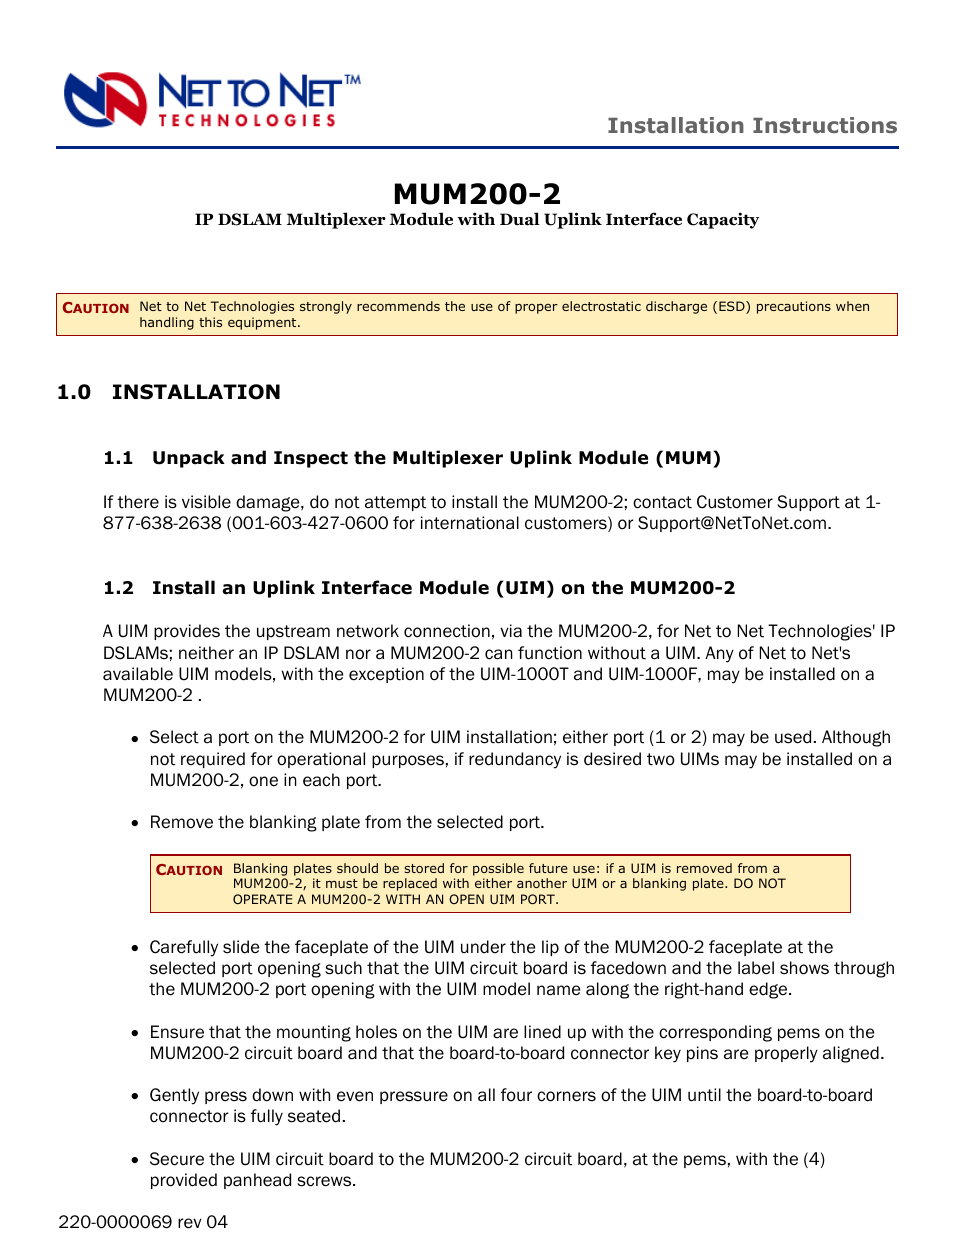 IP DSLAM Multiplexer Module MUM200-2